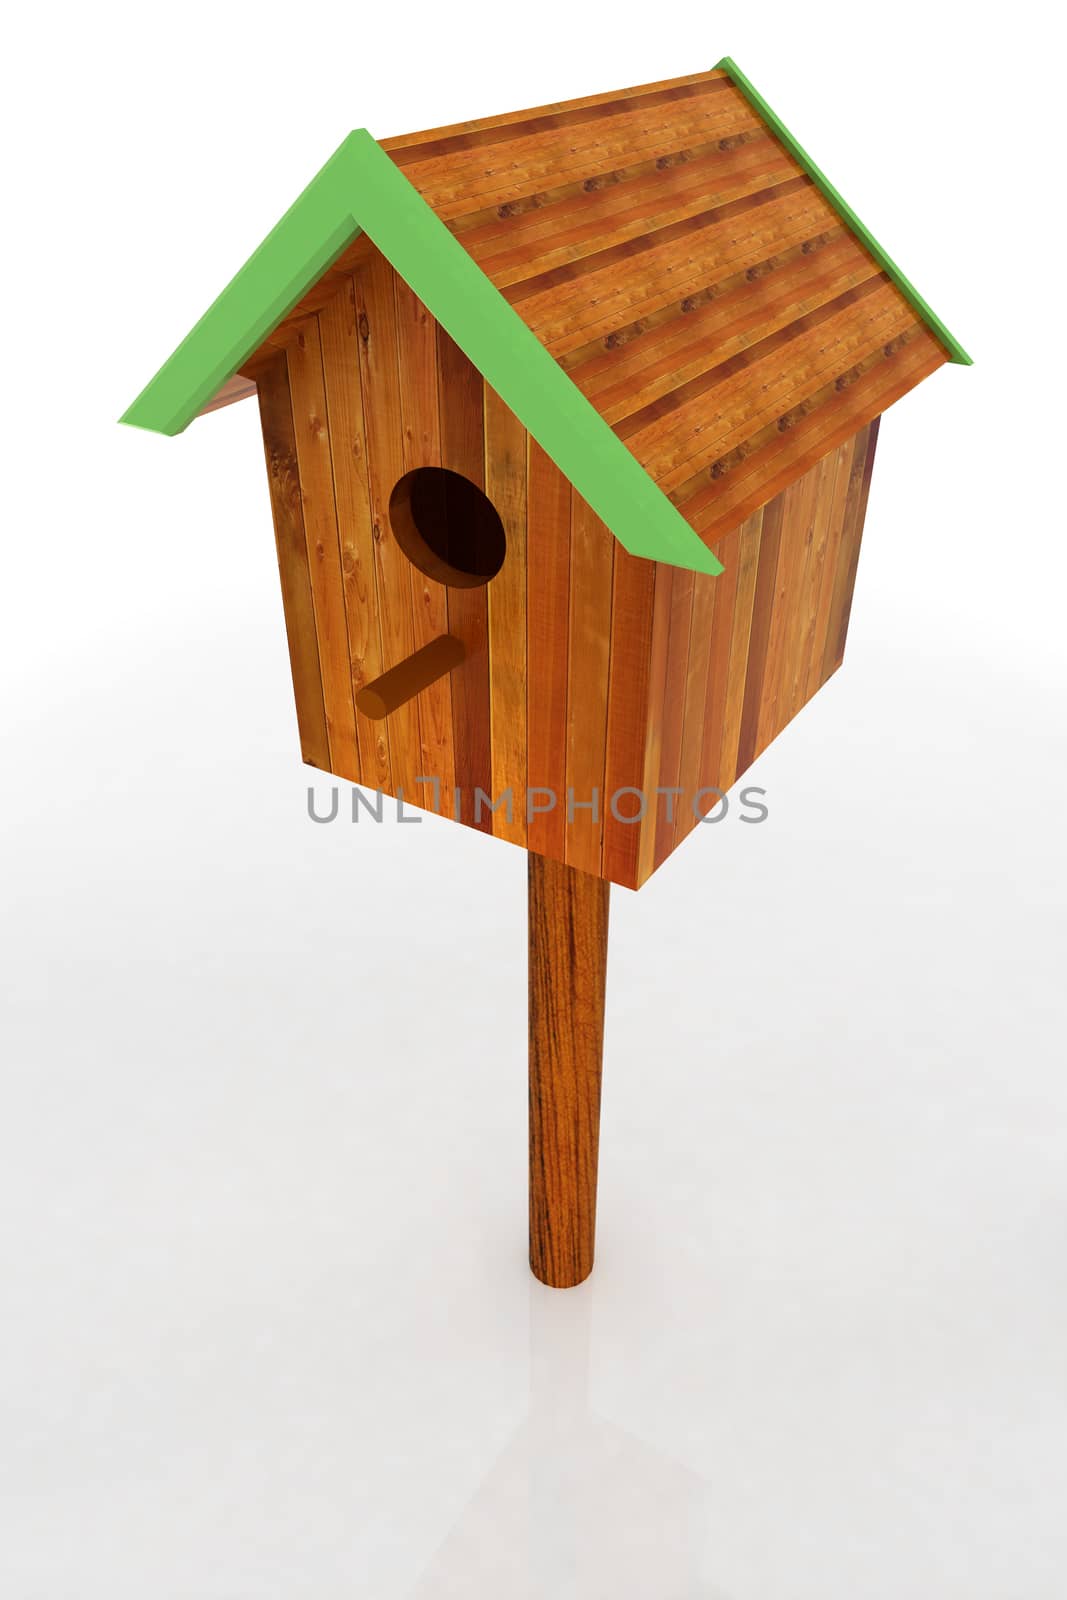 Nest box birdhouse by Guru3D